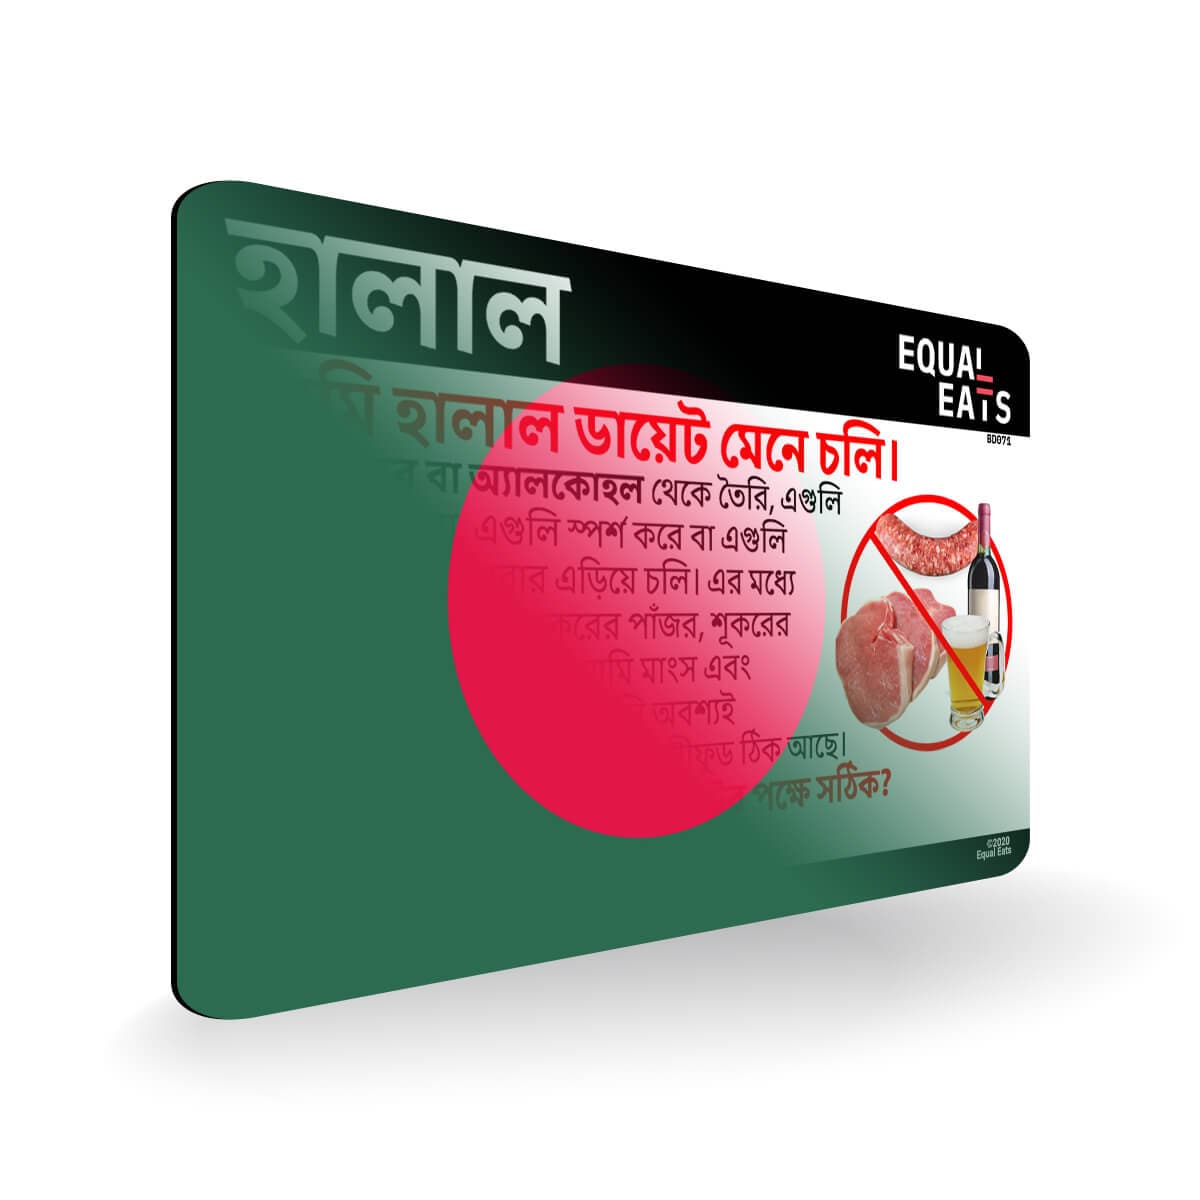 Lacto Ovo Vegetarian Diet in Bengali. Vegetarian Card for Bangladesh